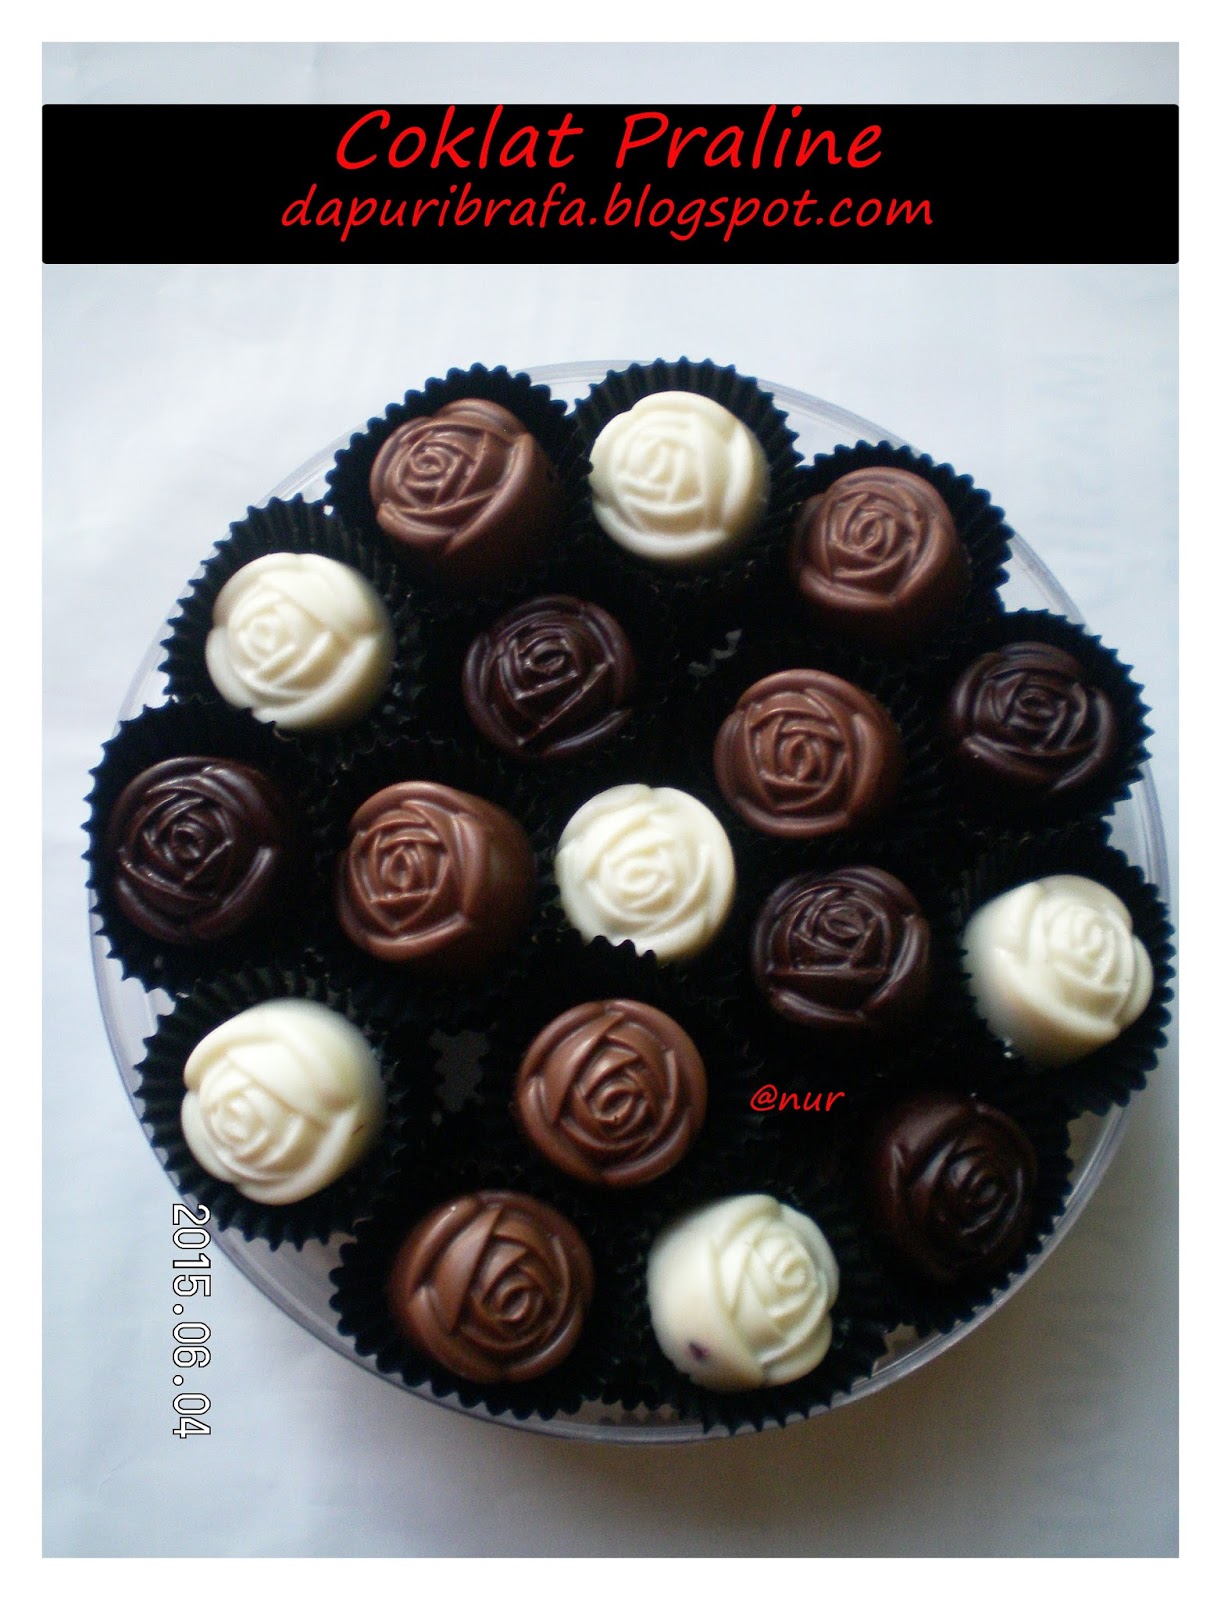 Dapur IbRafa: Coklat Praline